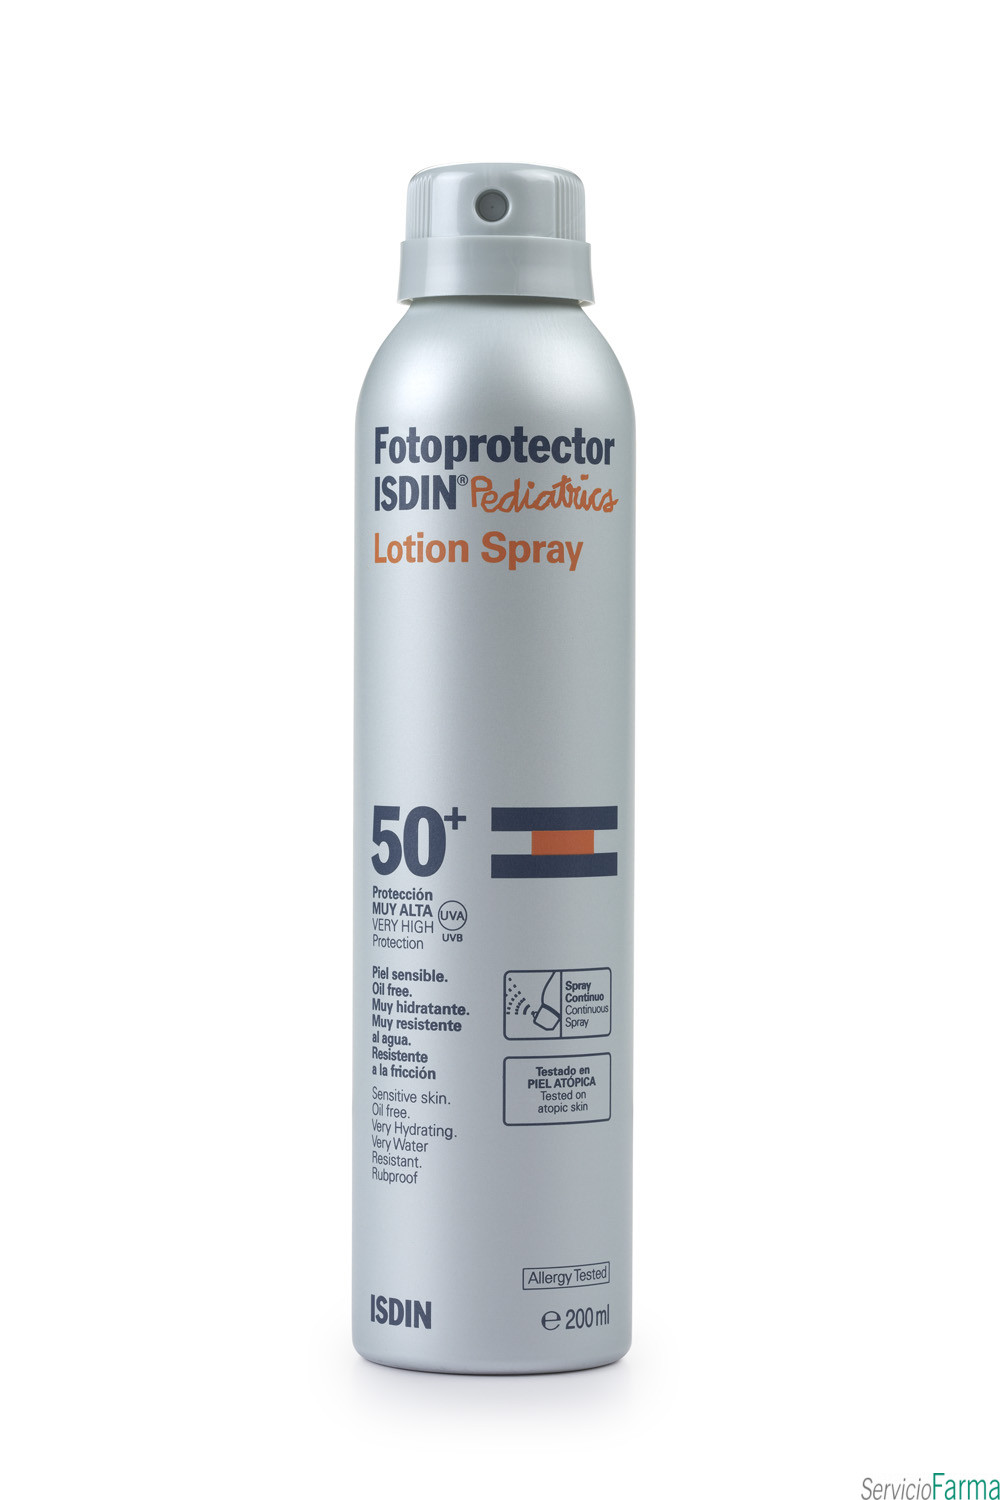 ISDIN Fotoprotector Lotion Spray SPF50+ PEDIATRICS 200 ml